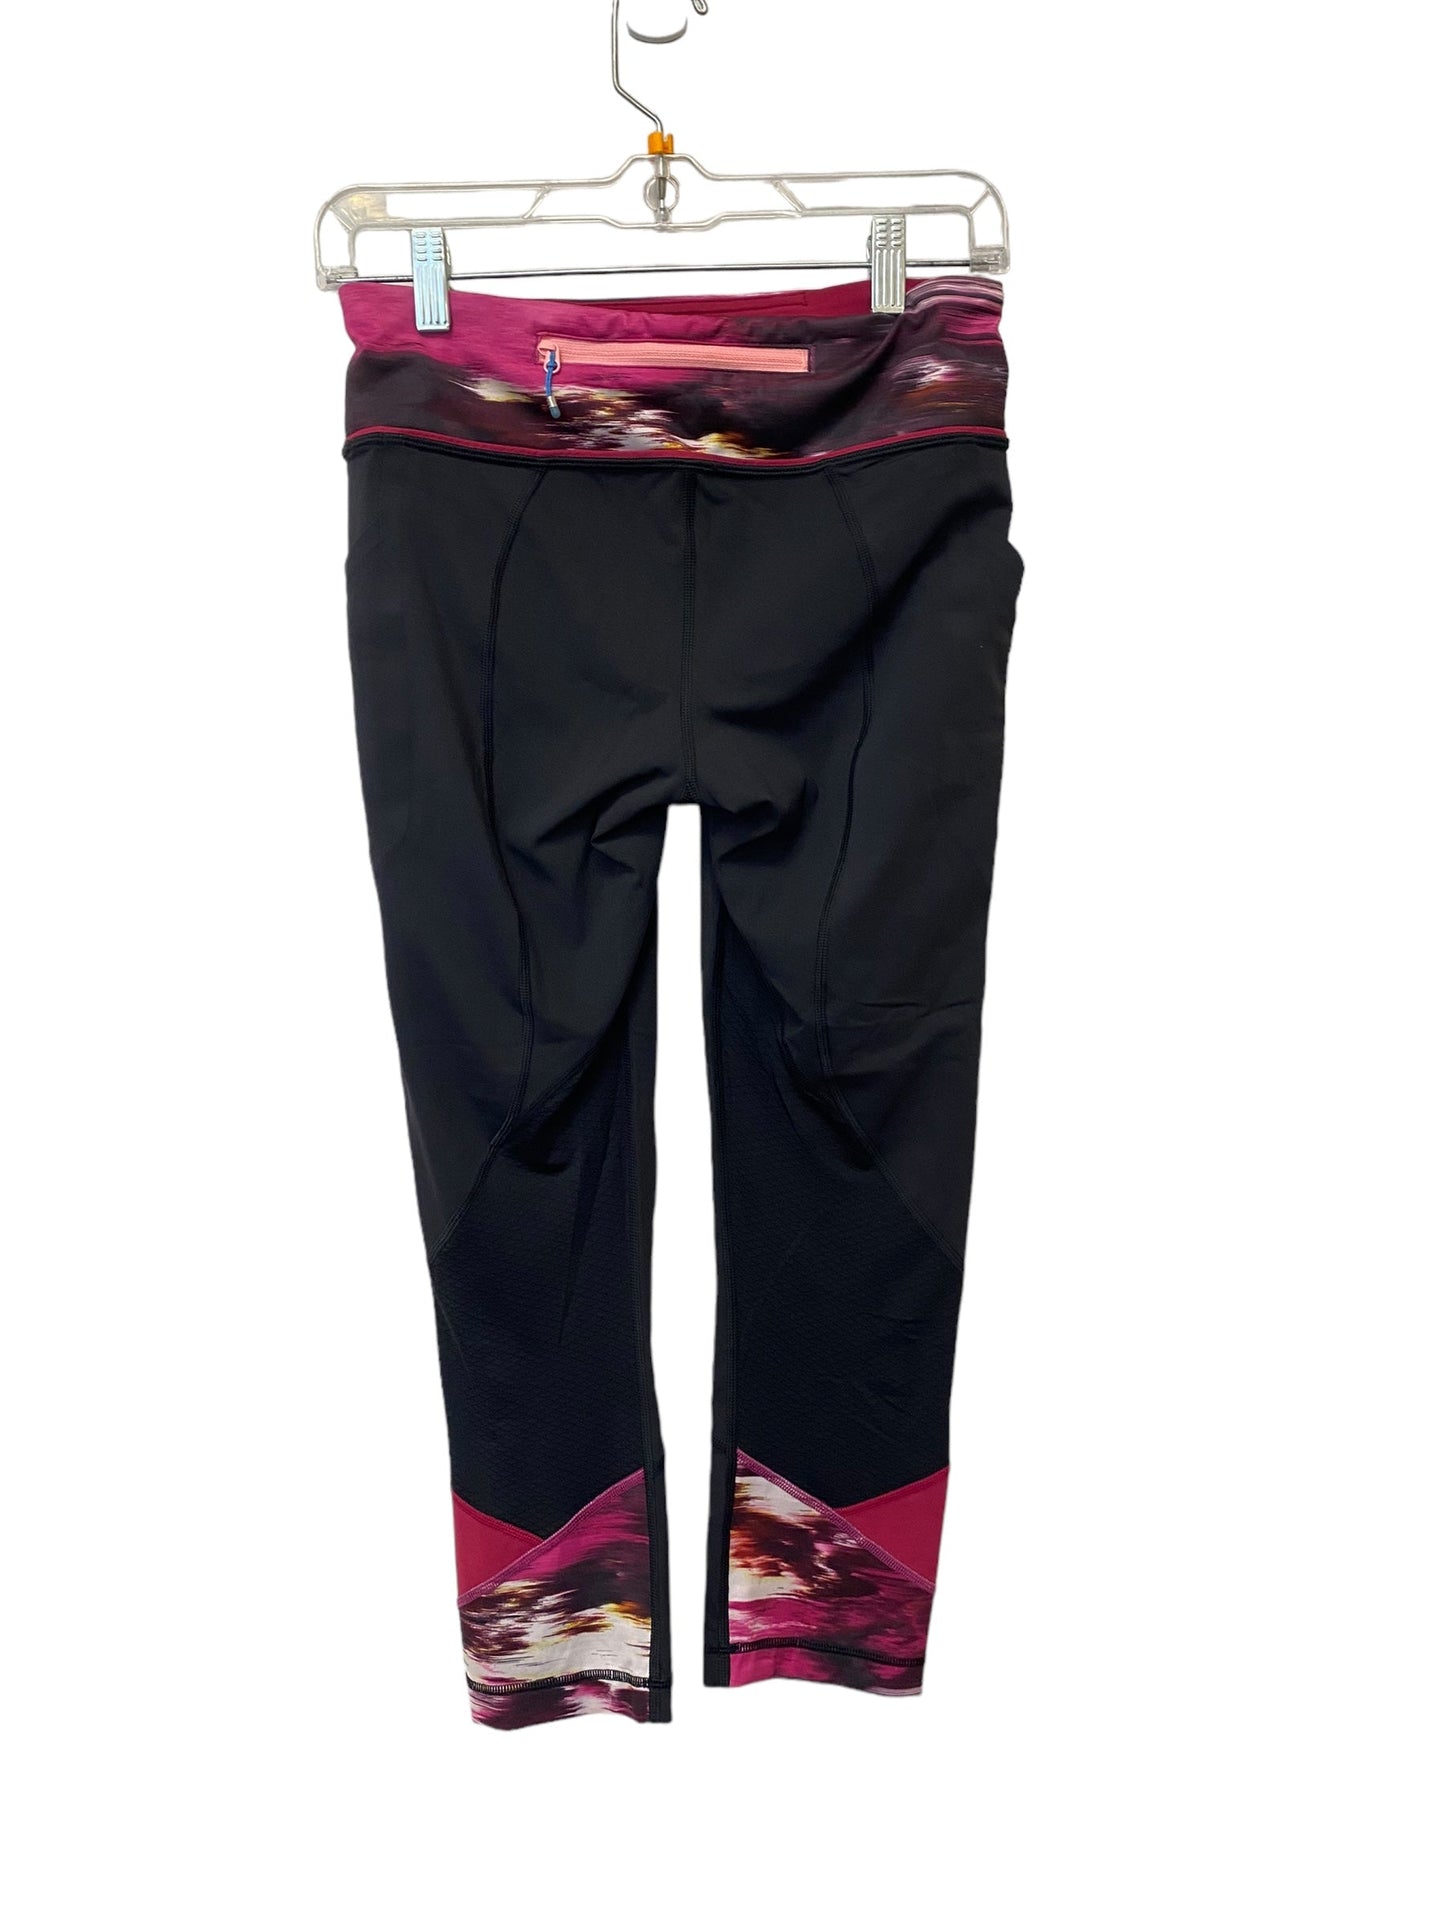 Black & Pink Athletic Leggings Lululemon, Size 6